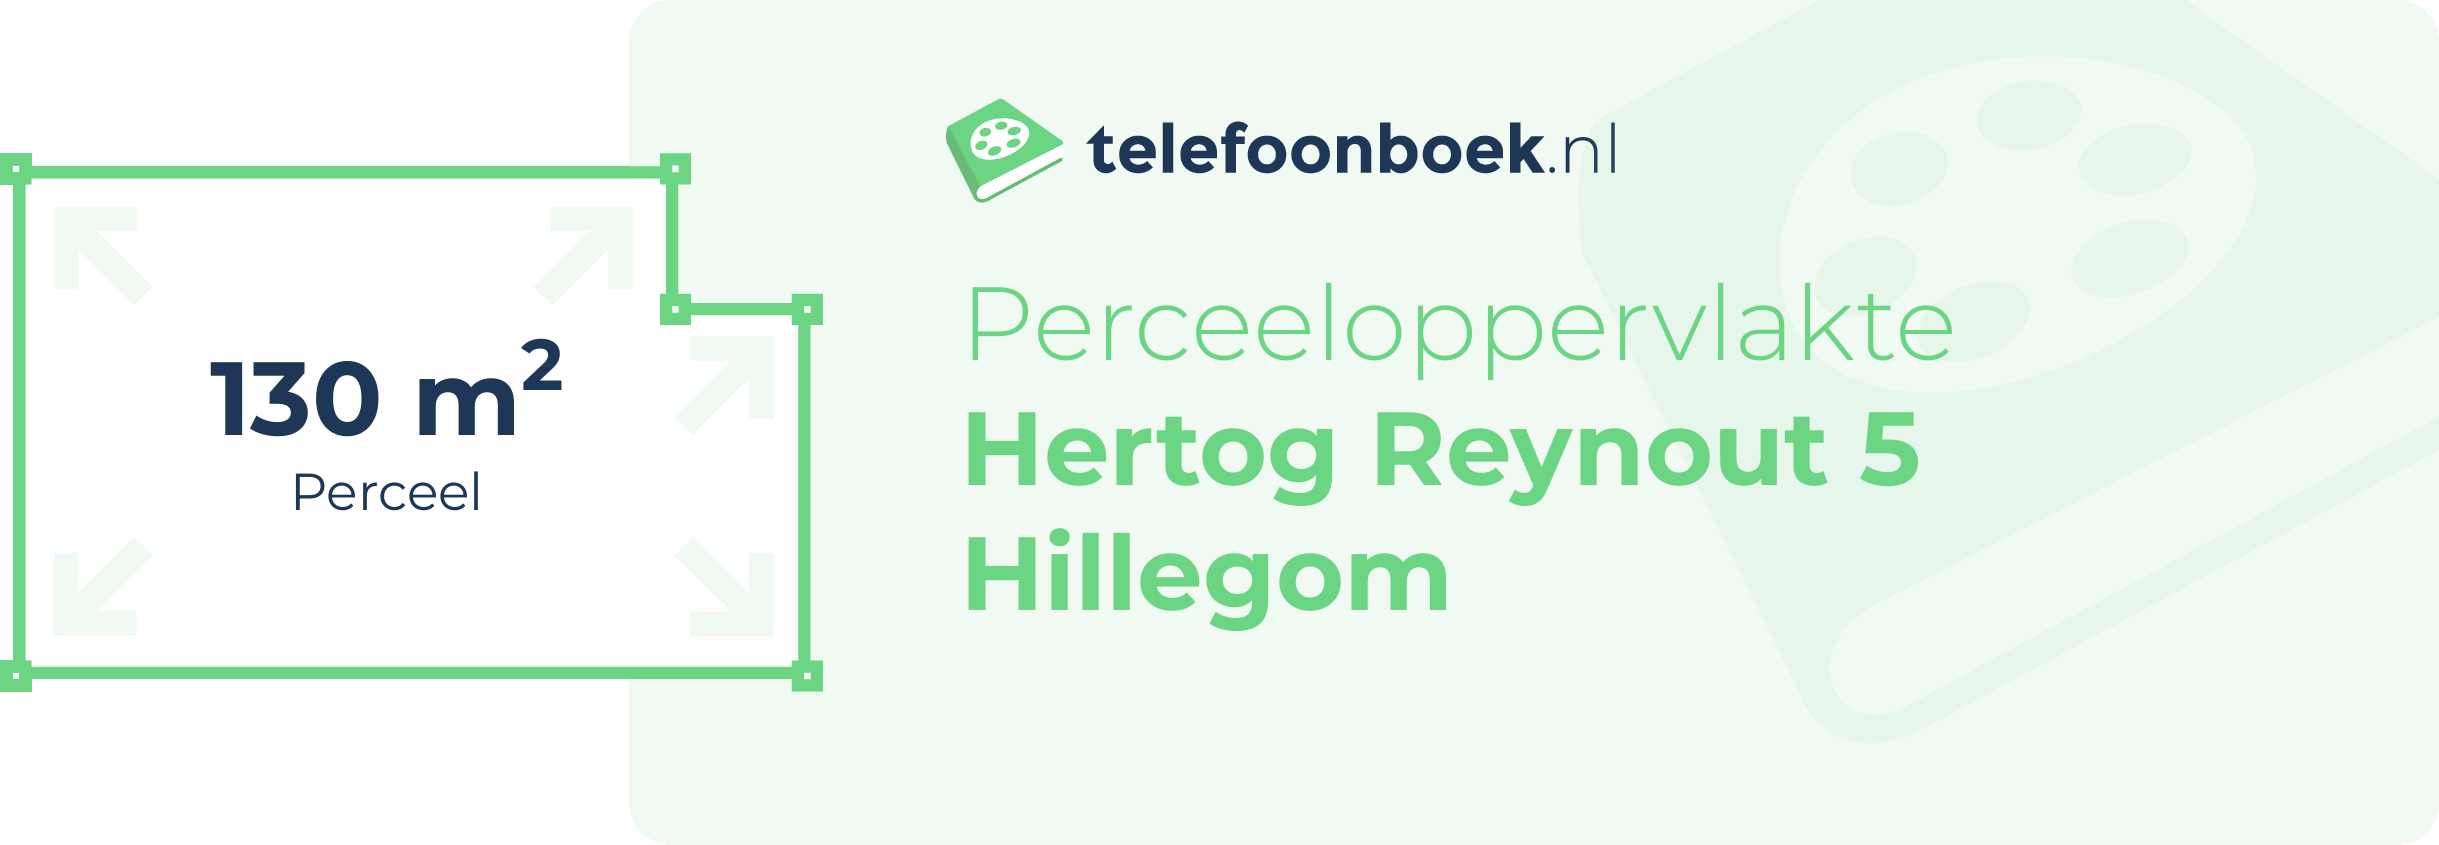 Perceeloppervlakte Hertog Reynout 5 Hillegom